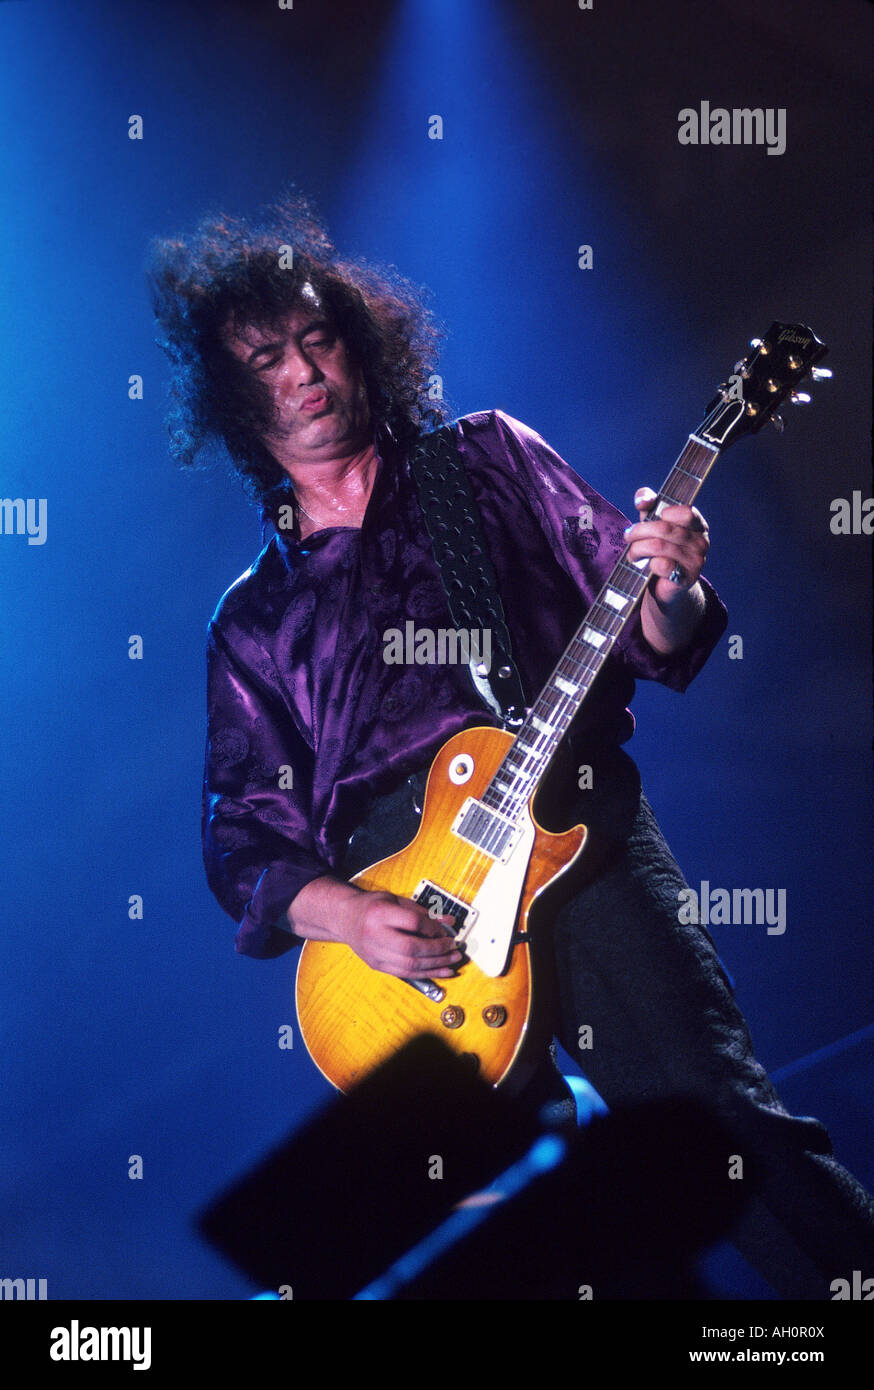 JIMMY PAGE - UK chitarrista con la sua chitarra Les Paul Foto stock - Alamy